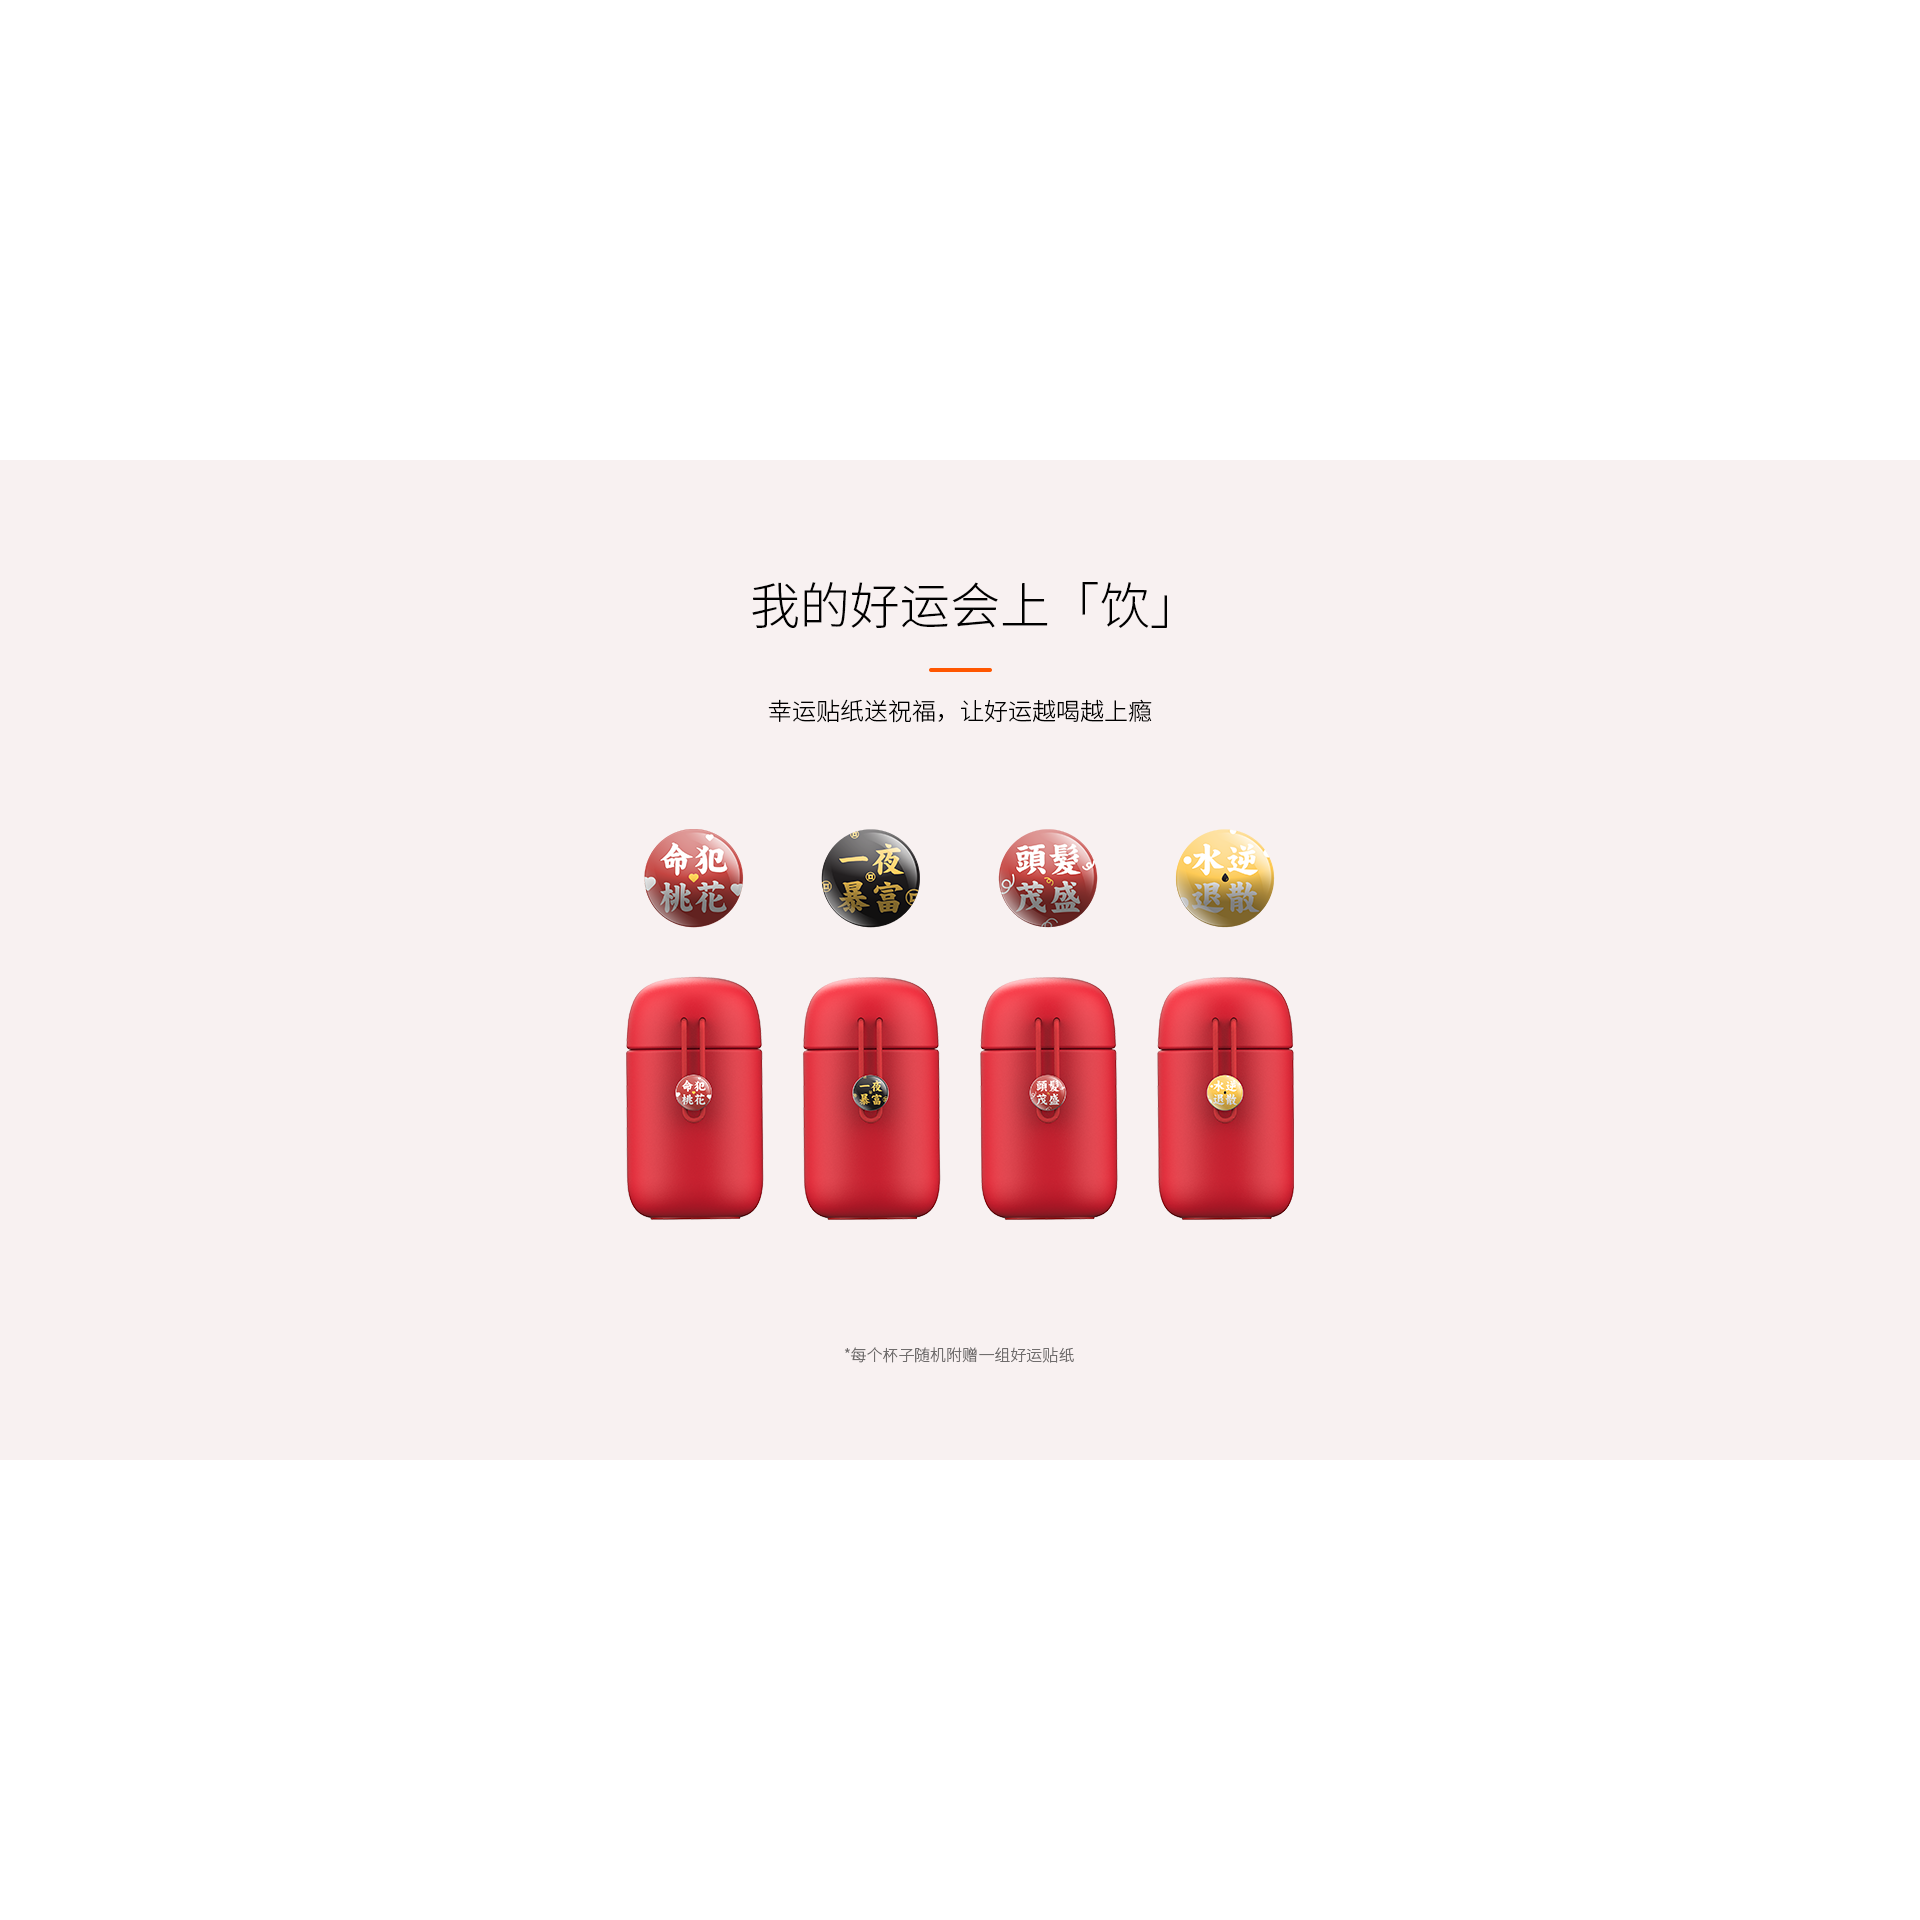 JOYOUNG 【Low Price Guarantee】 Mini Rice Cooker 2L JYF-20FS987M